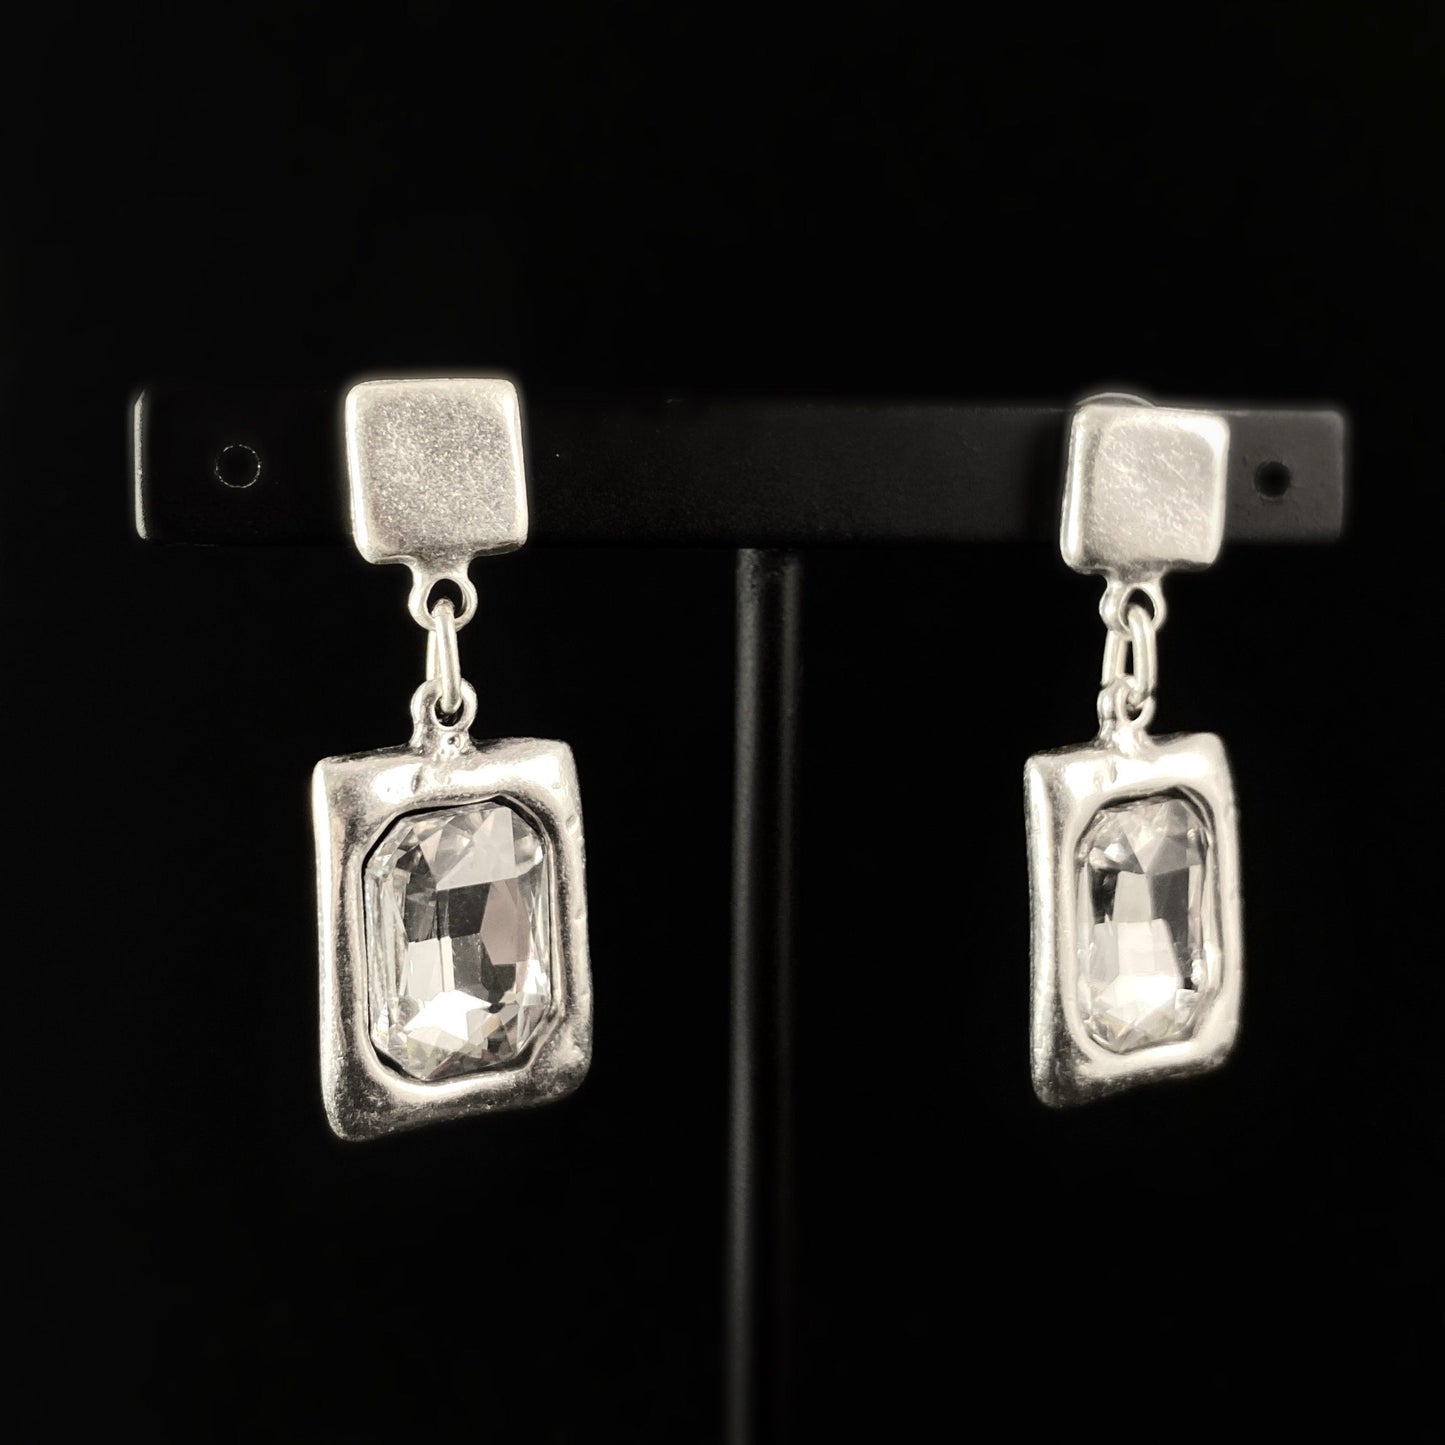 Silver Rectangle Crystal Drop Earrings -  Handmade, Nickel Free - Elegant Minimalist Jewelry for Women